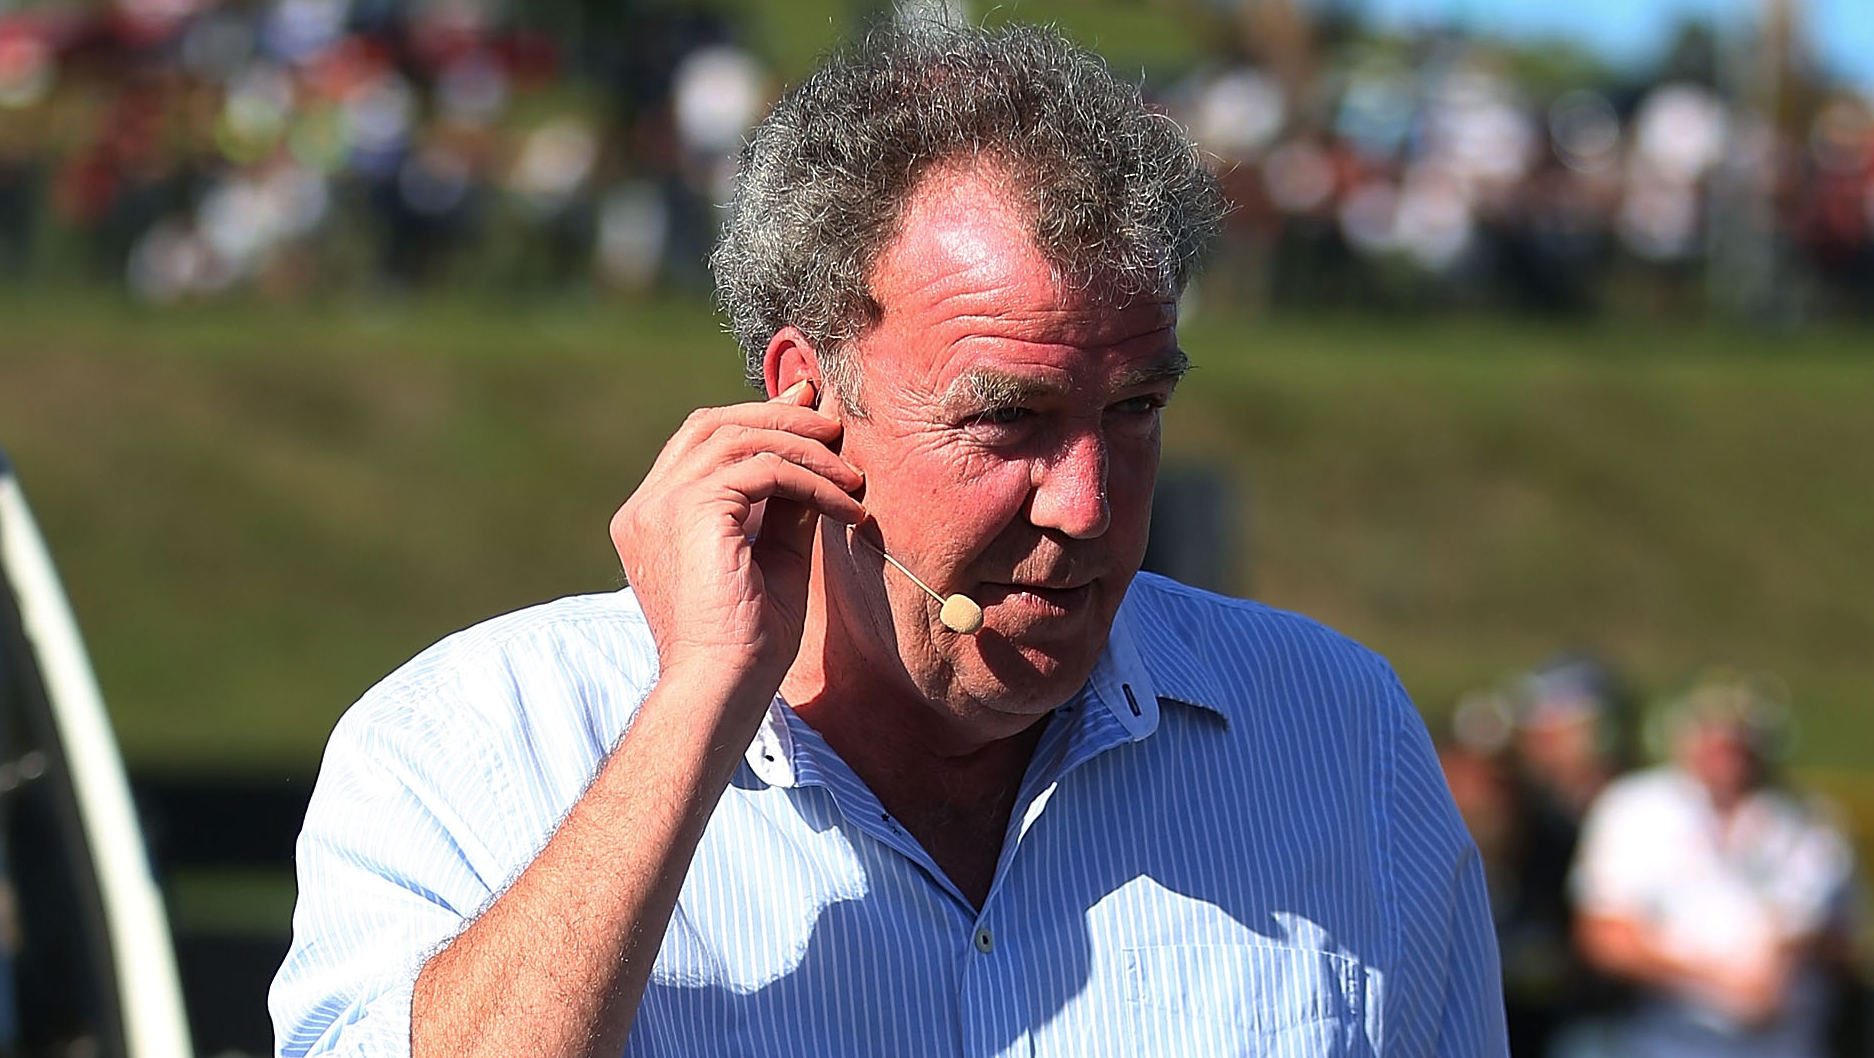 Clarkson, host, fired by the BBC CBS News